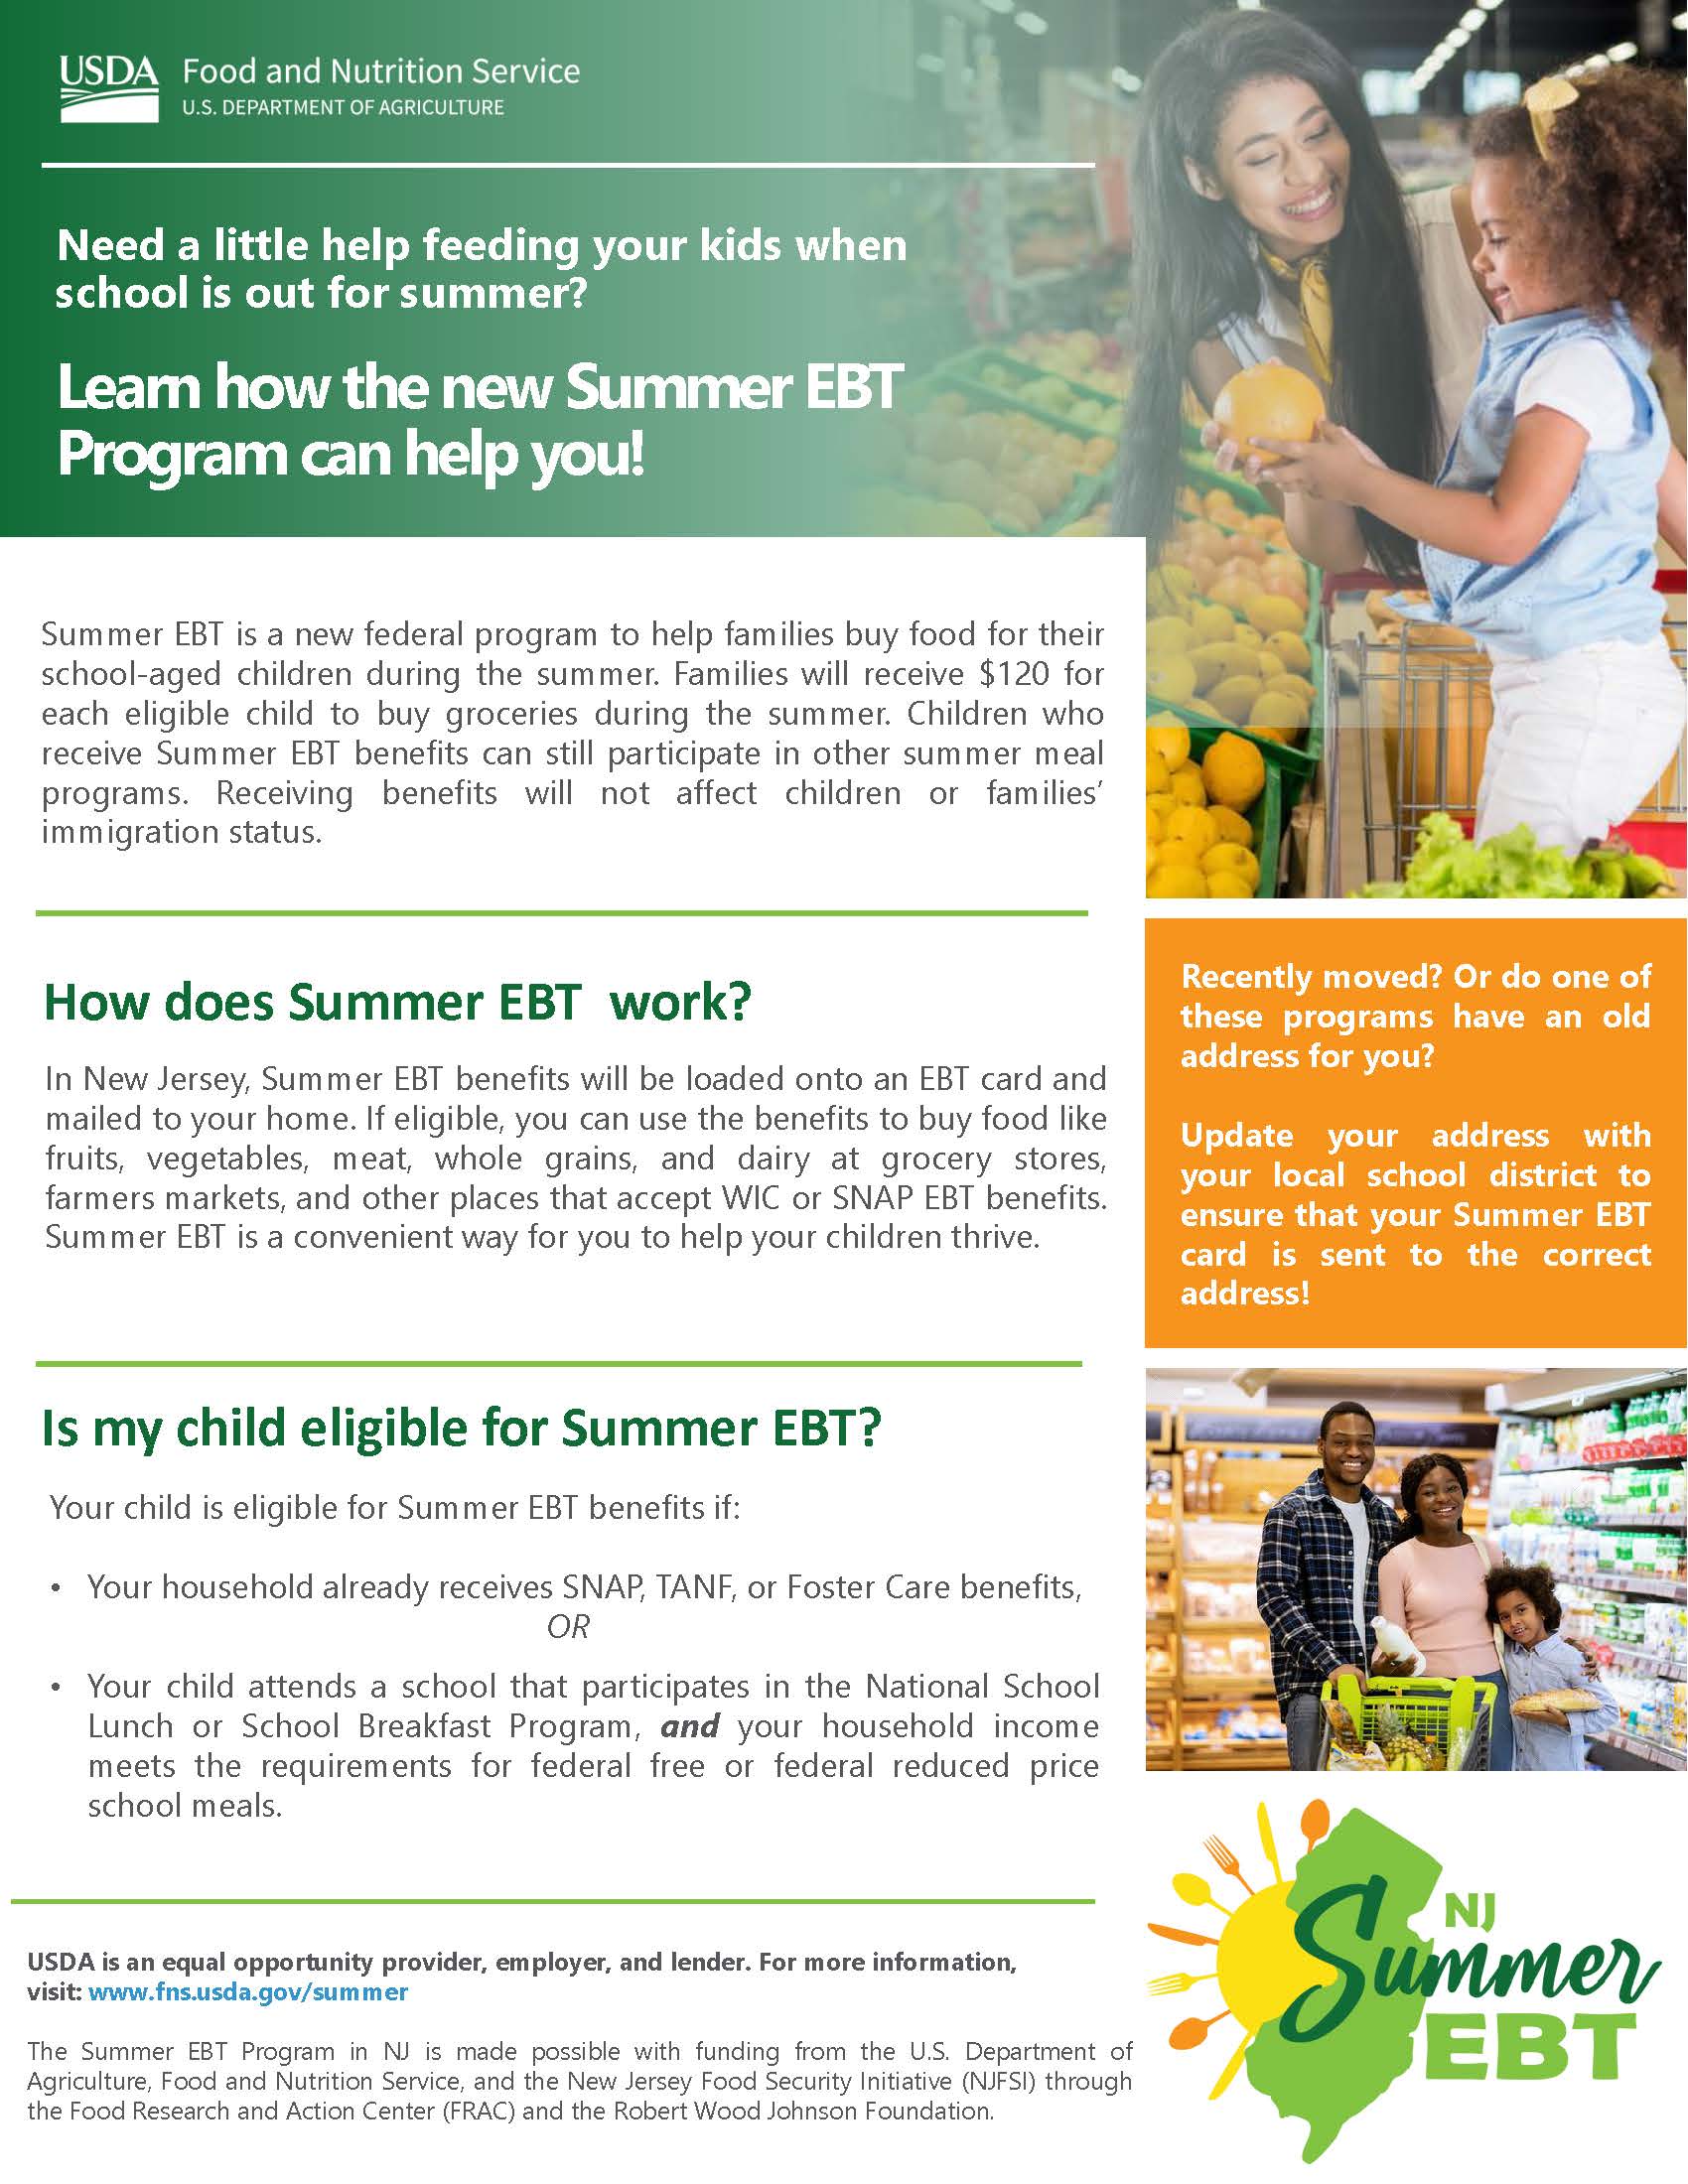 NJDA Summer EBT Flyer (1)_Page_1.jpg